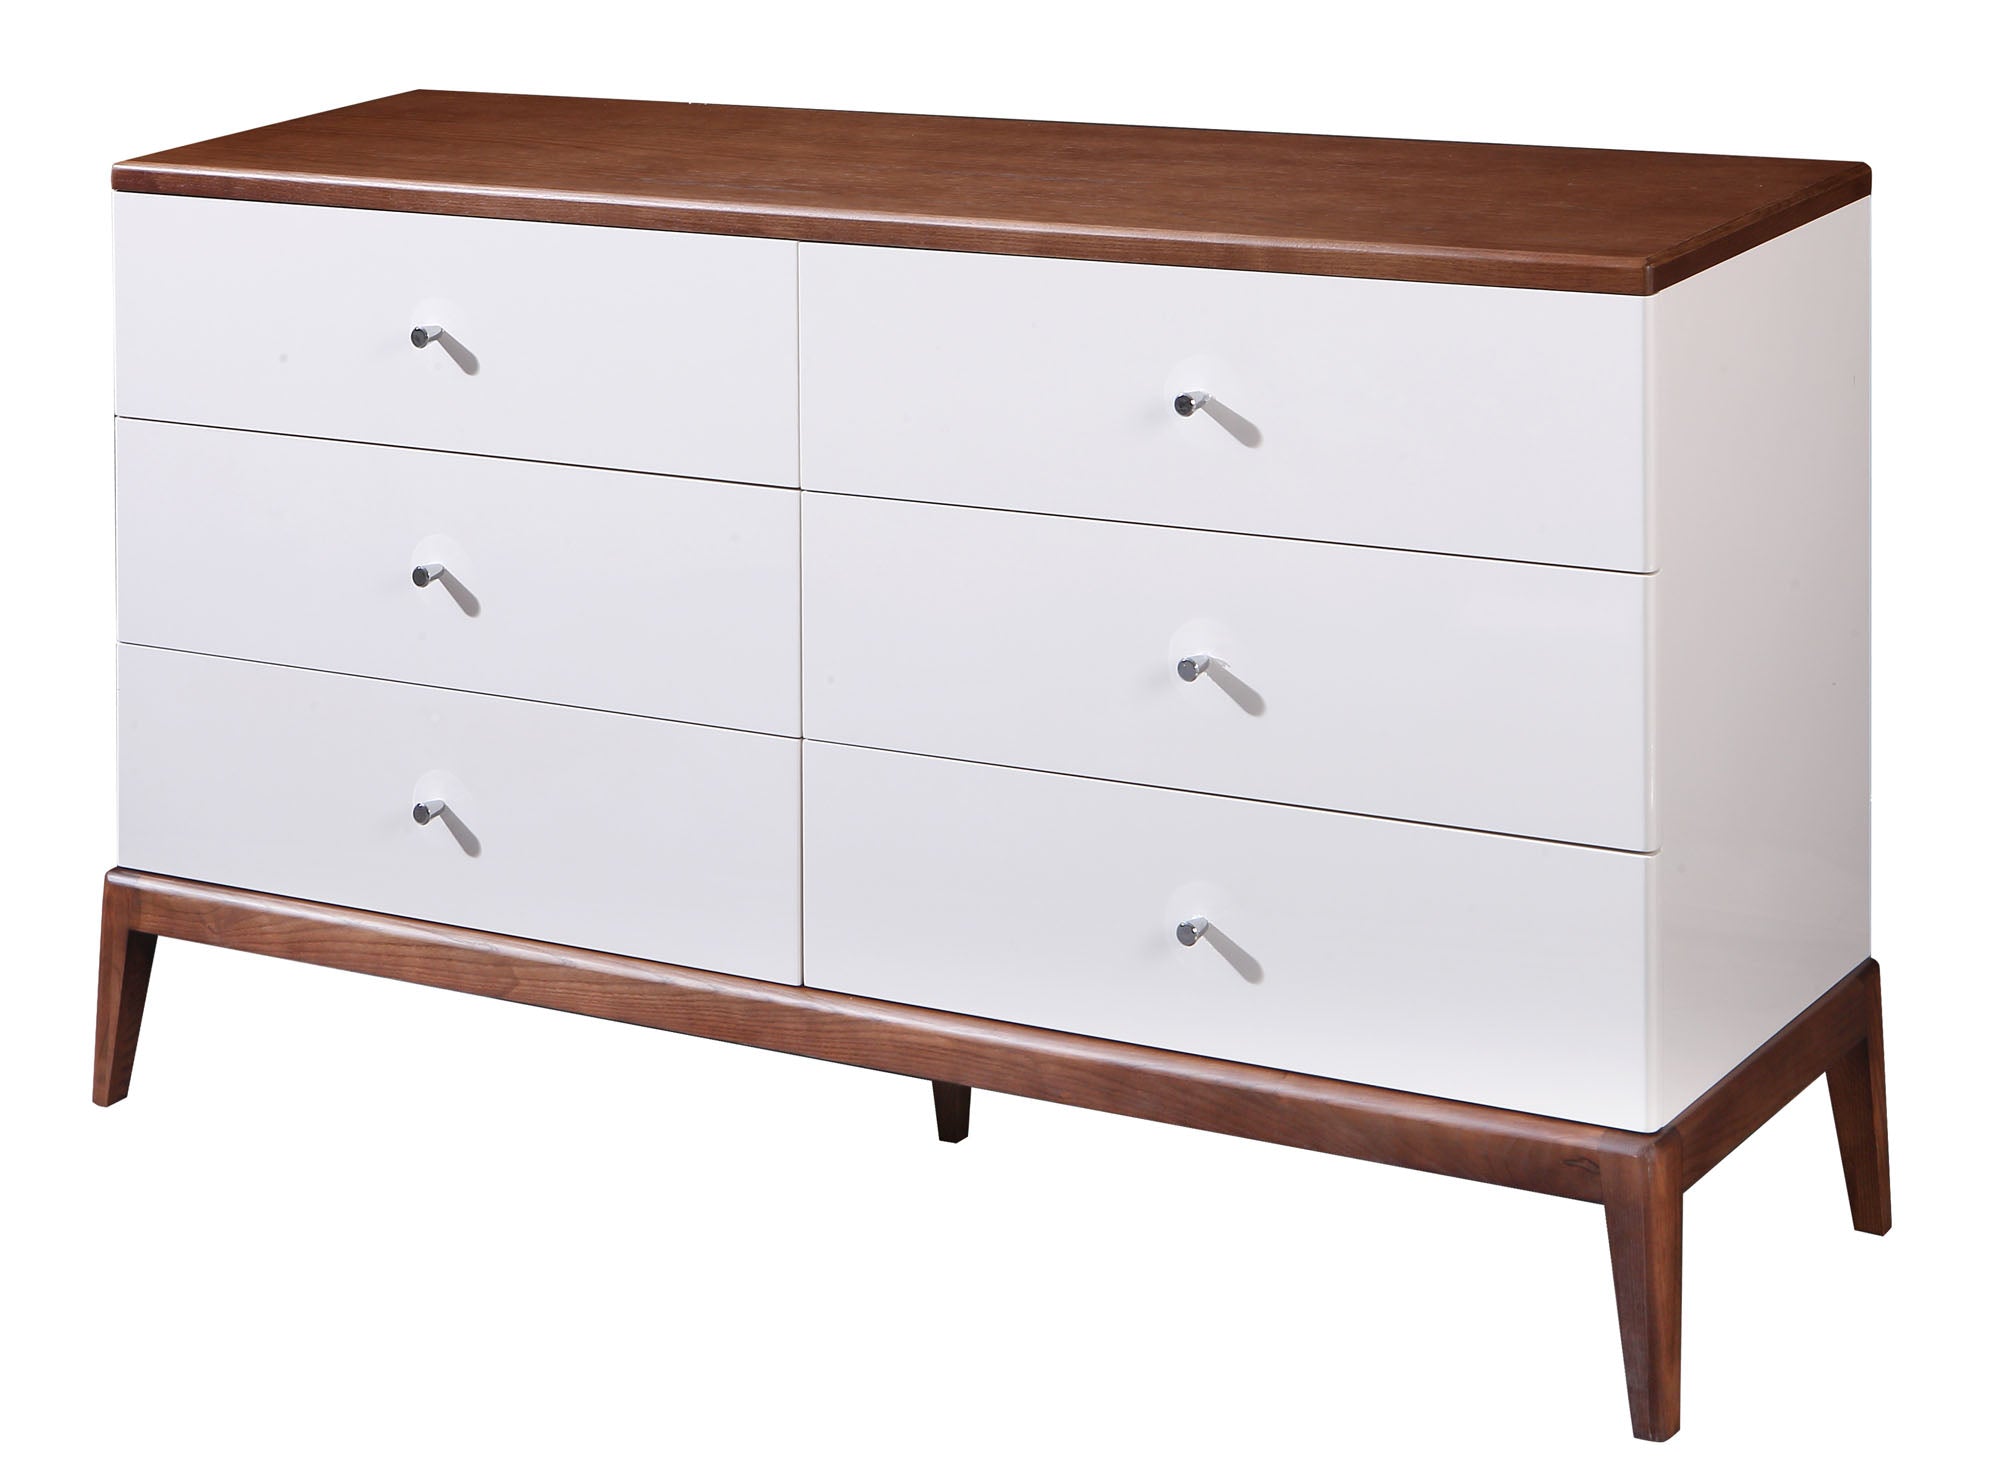 Tranquility Double Dresser - MJM Furniture